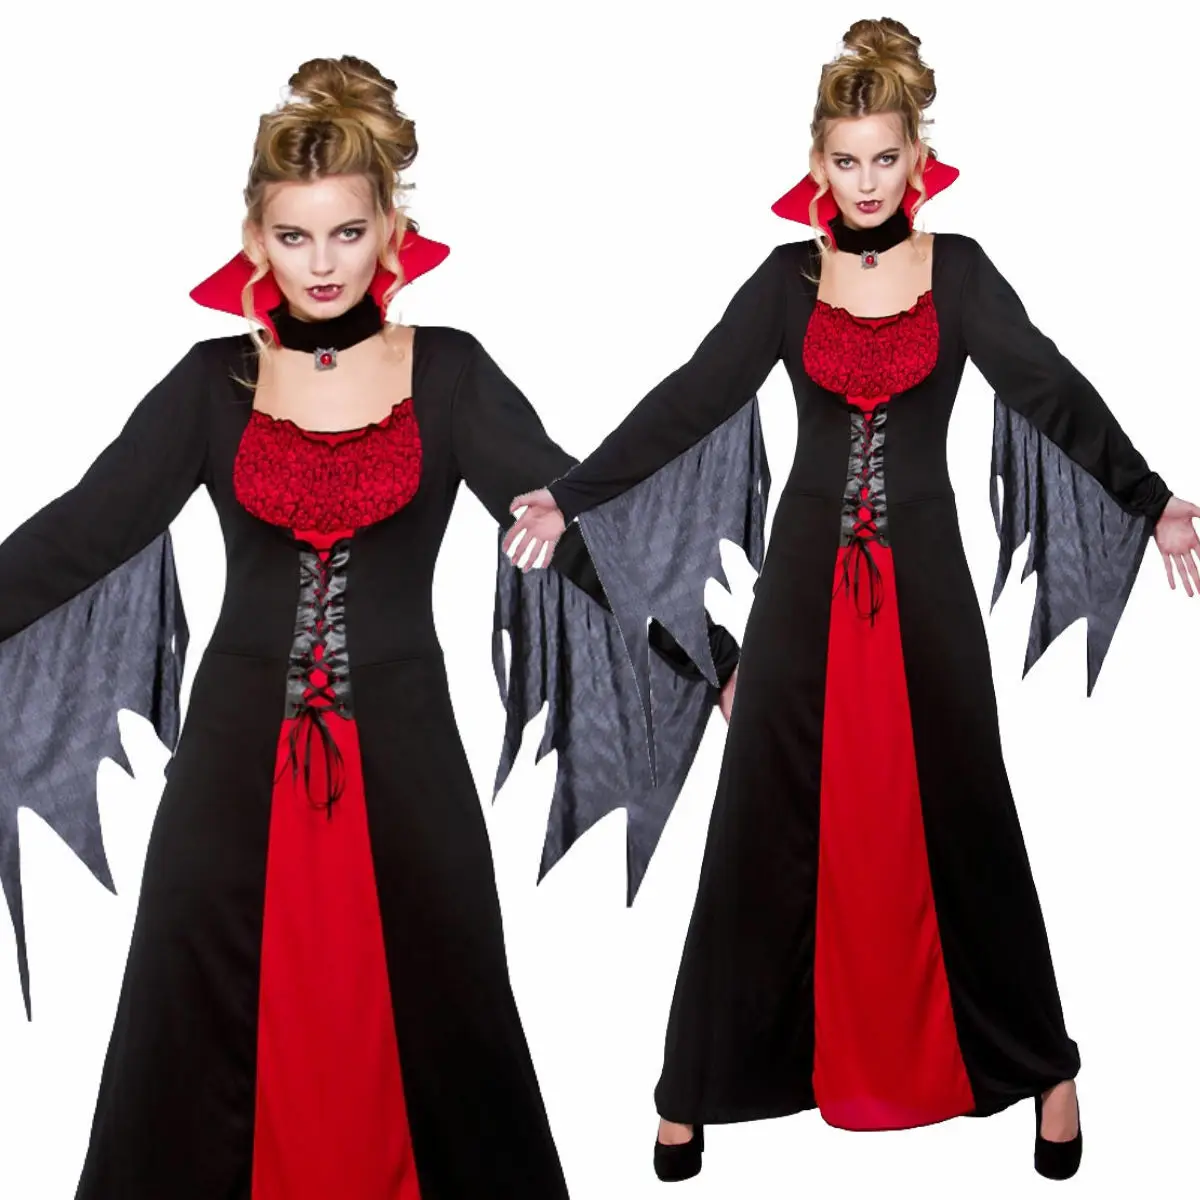 Vampiress Ladies Halloween Fancy Dress Womens Adults Vampire Costume Outfit